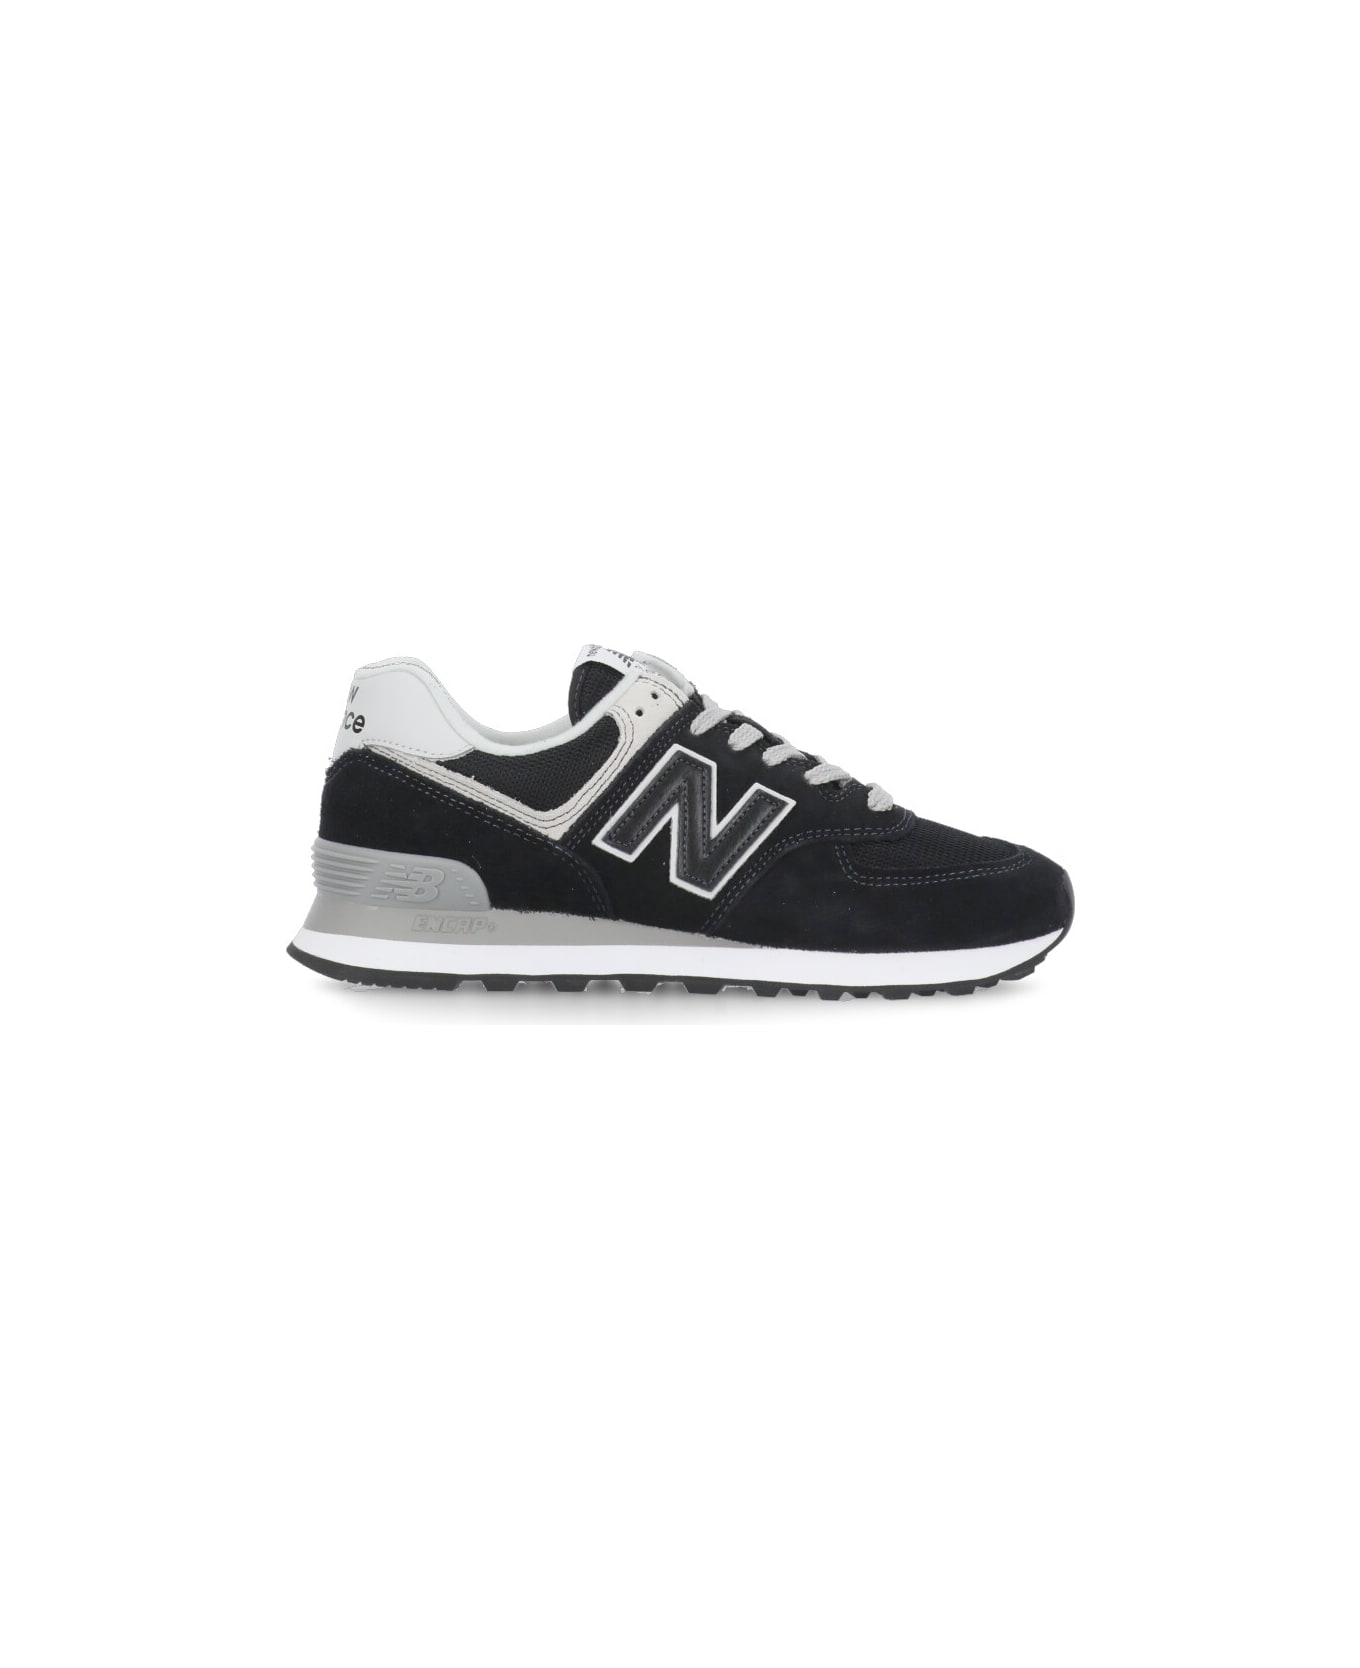 New Balance 574 Sneakers - Black